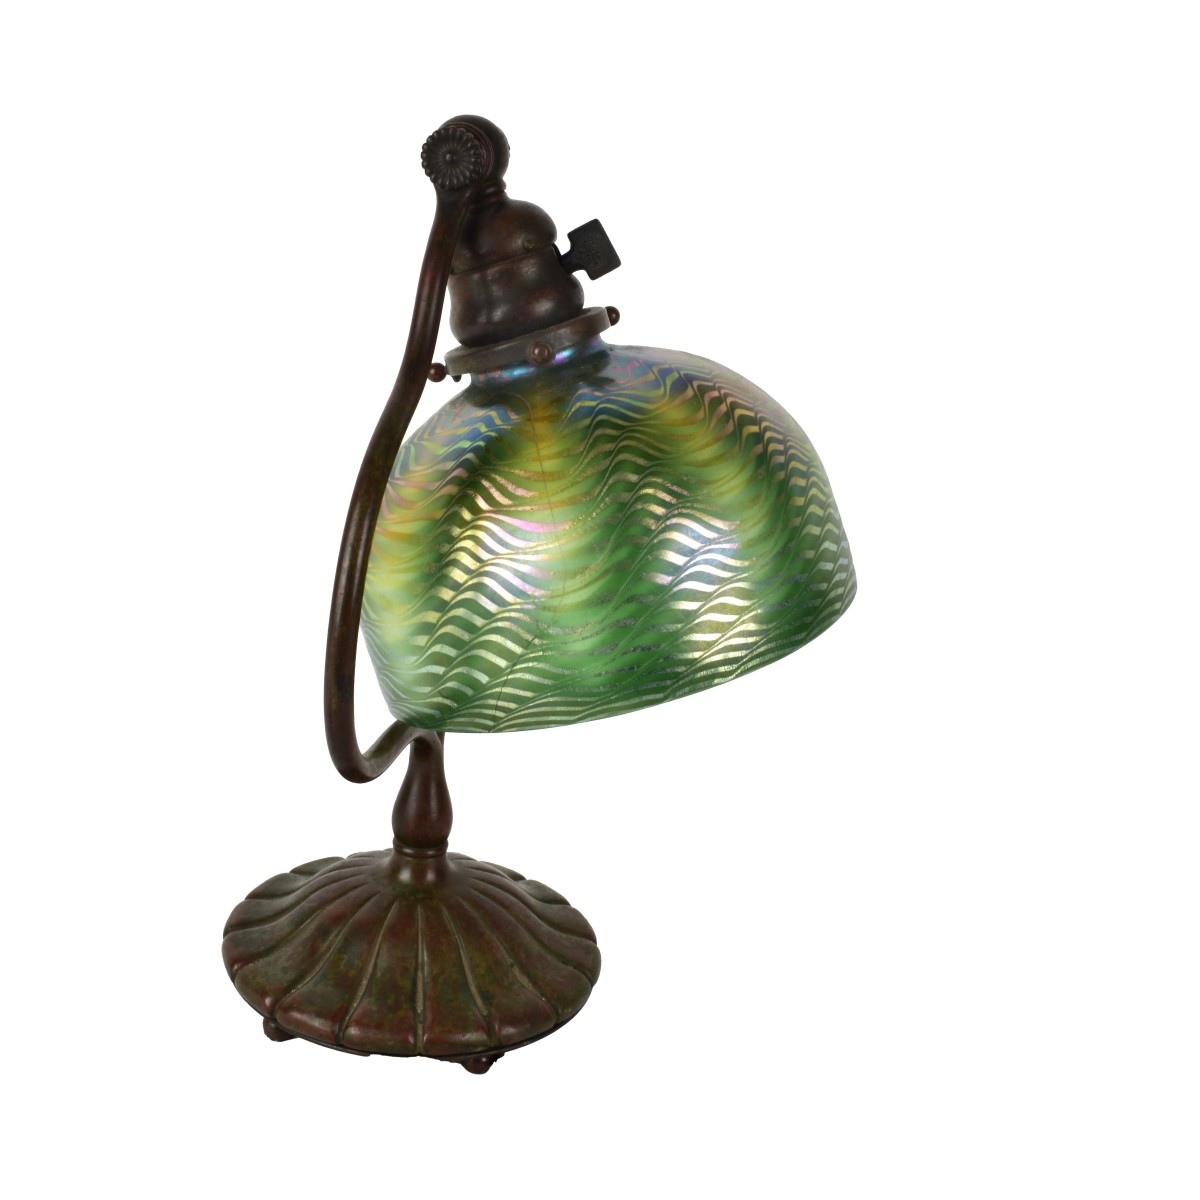 Circa 1910 Tiffany Studios Desk Lamp